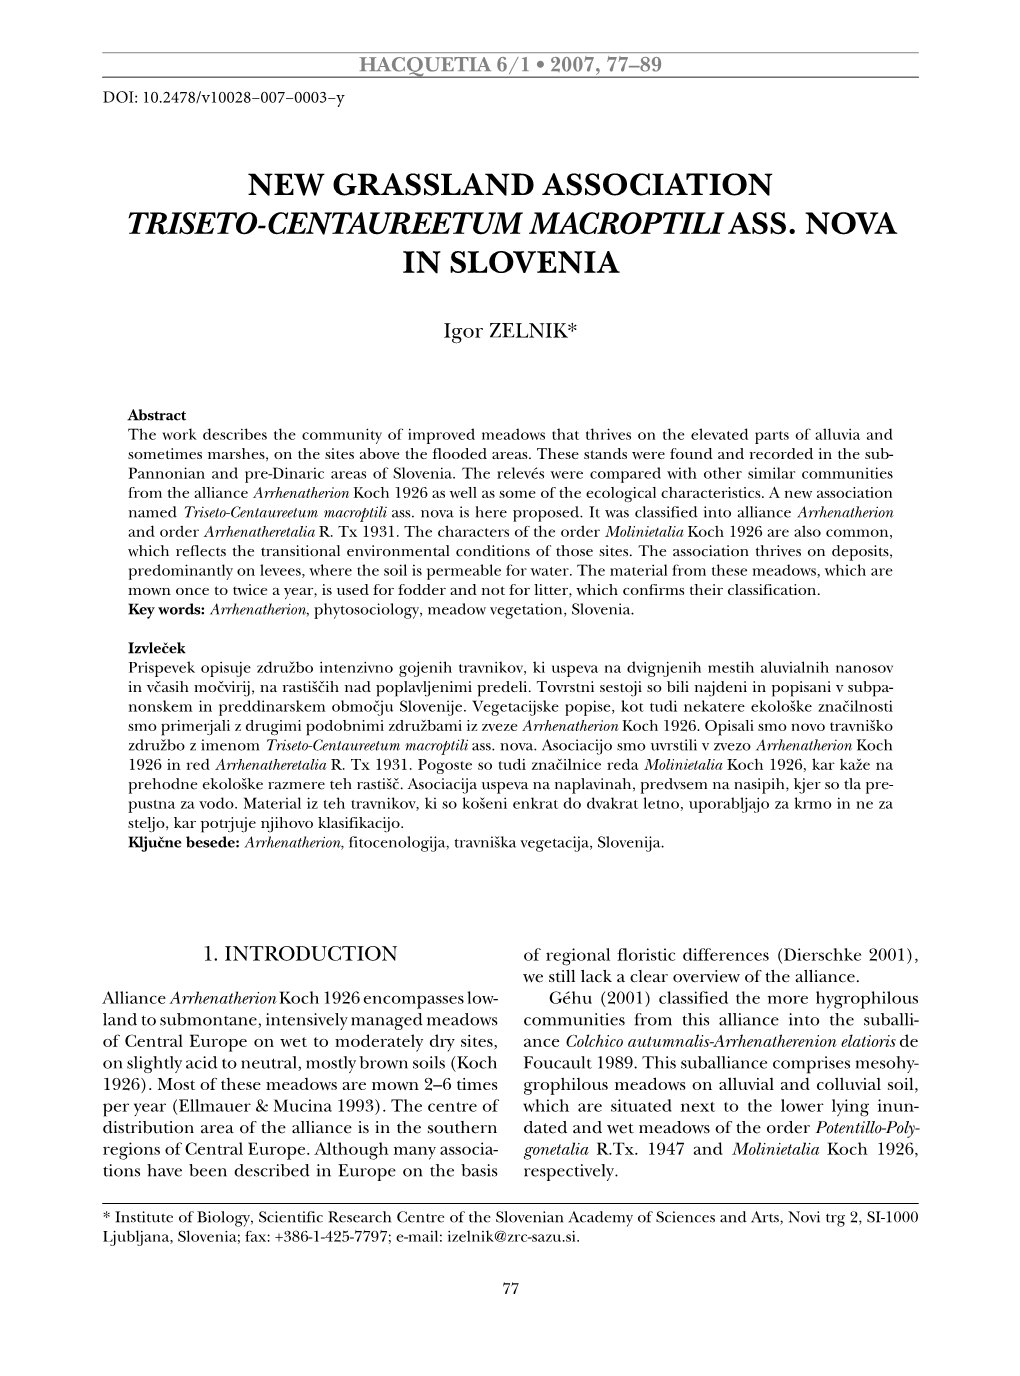 New Grassland Association Triseto-Centaureetum Macroptili Ass. Nova in Slovenia